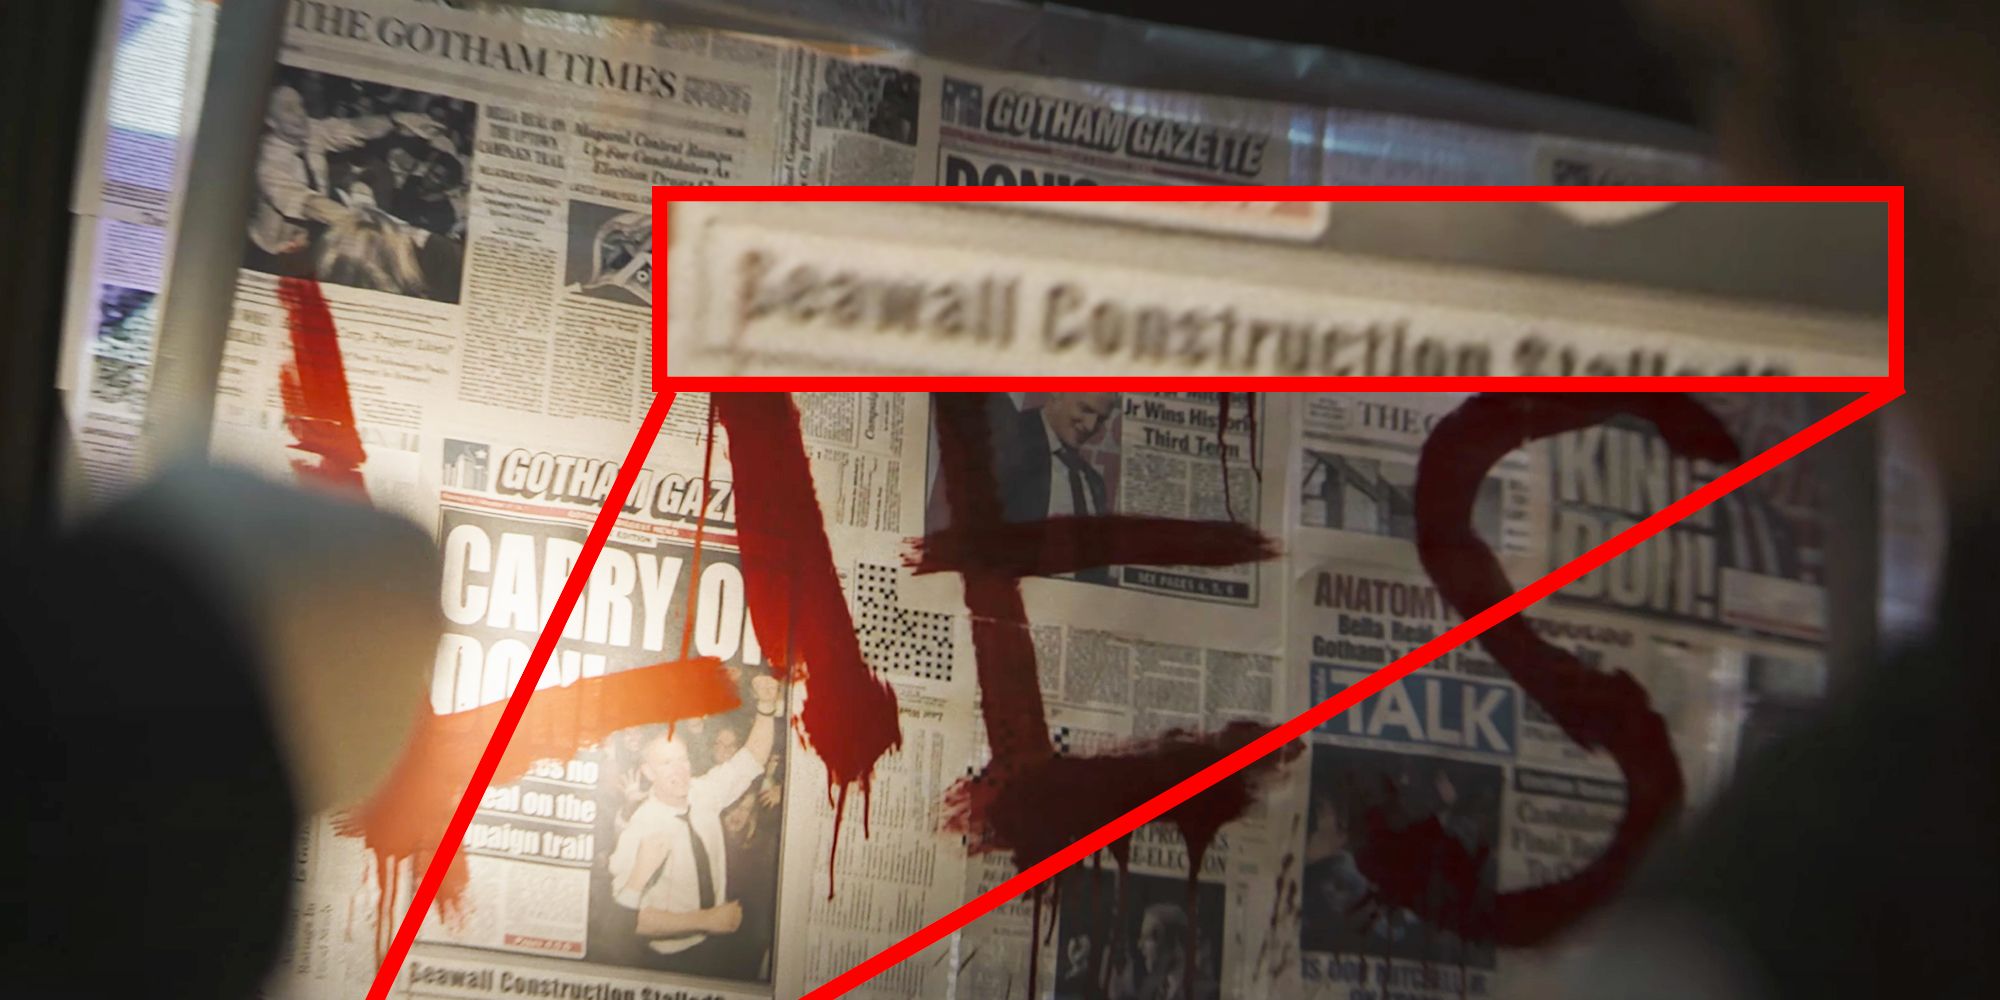 A Still from The Batman Trailer shows a sub headline on a newspaper